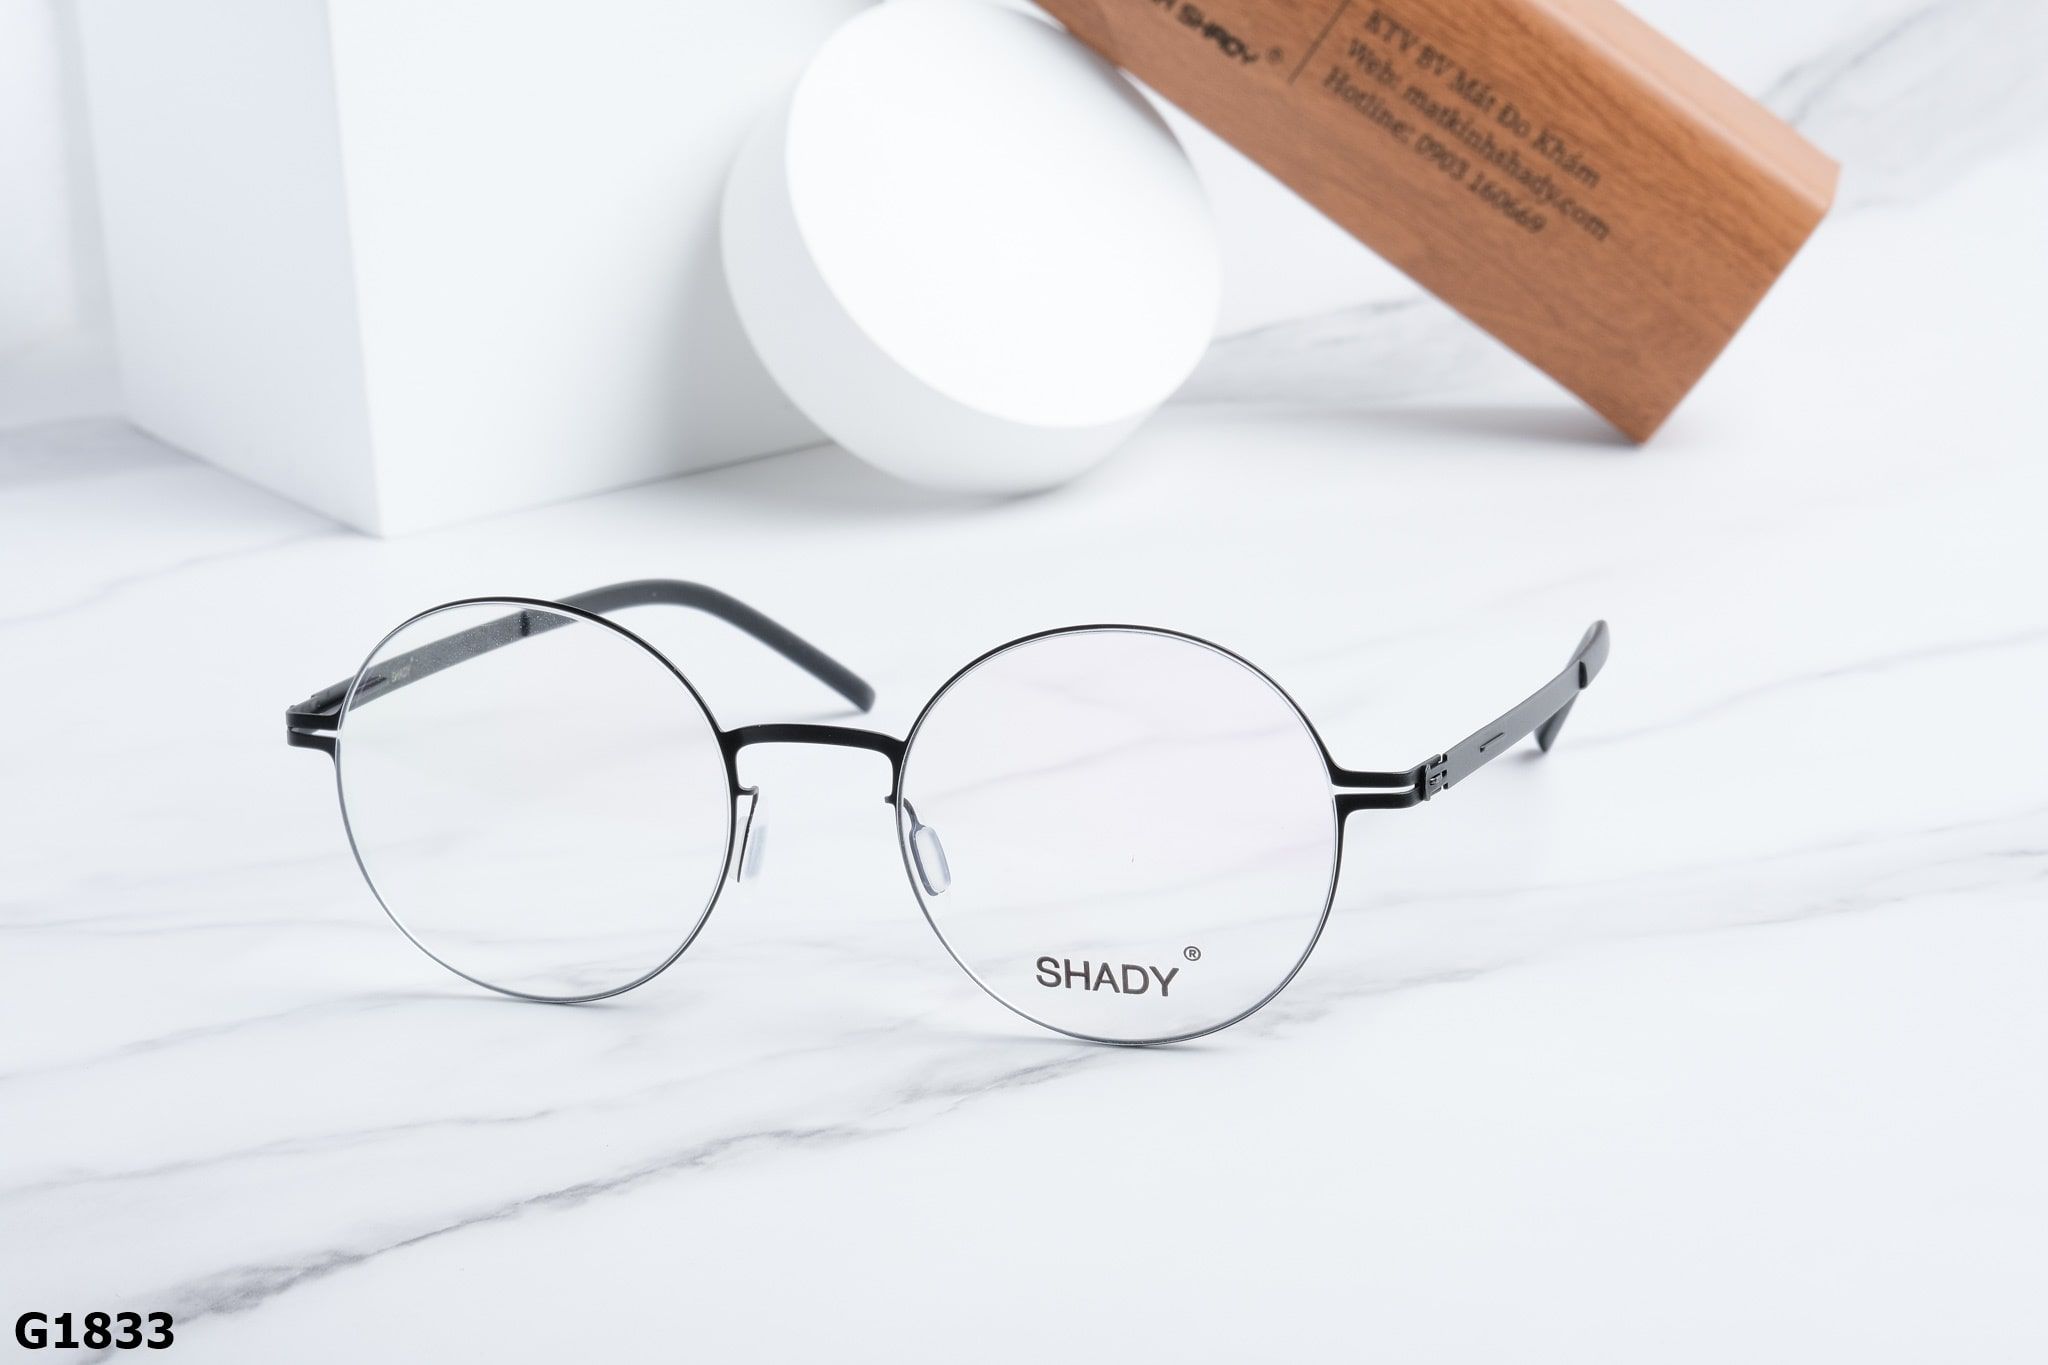  SHADY Eyewear - Glasses - G1833 